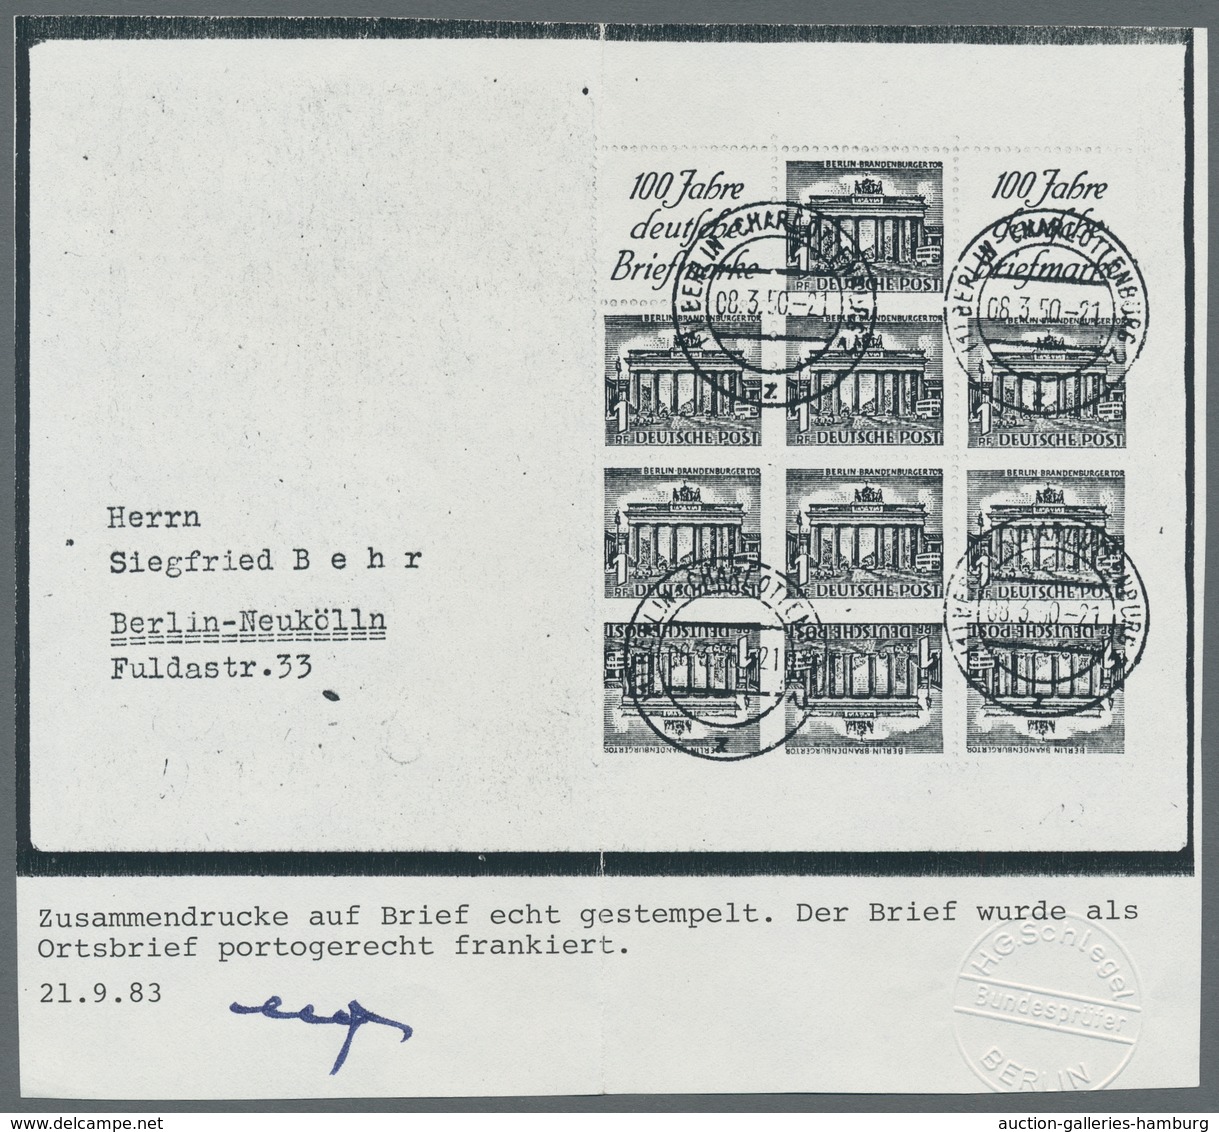 Berlin - Zusammendrucke: 1949, "R 1d + 1 Pfg. + R 1d Bauten I", Blockstück Mit Neun Anhängenden Wert - Zusammendrucke